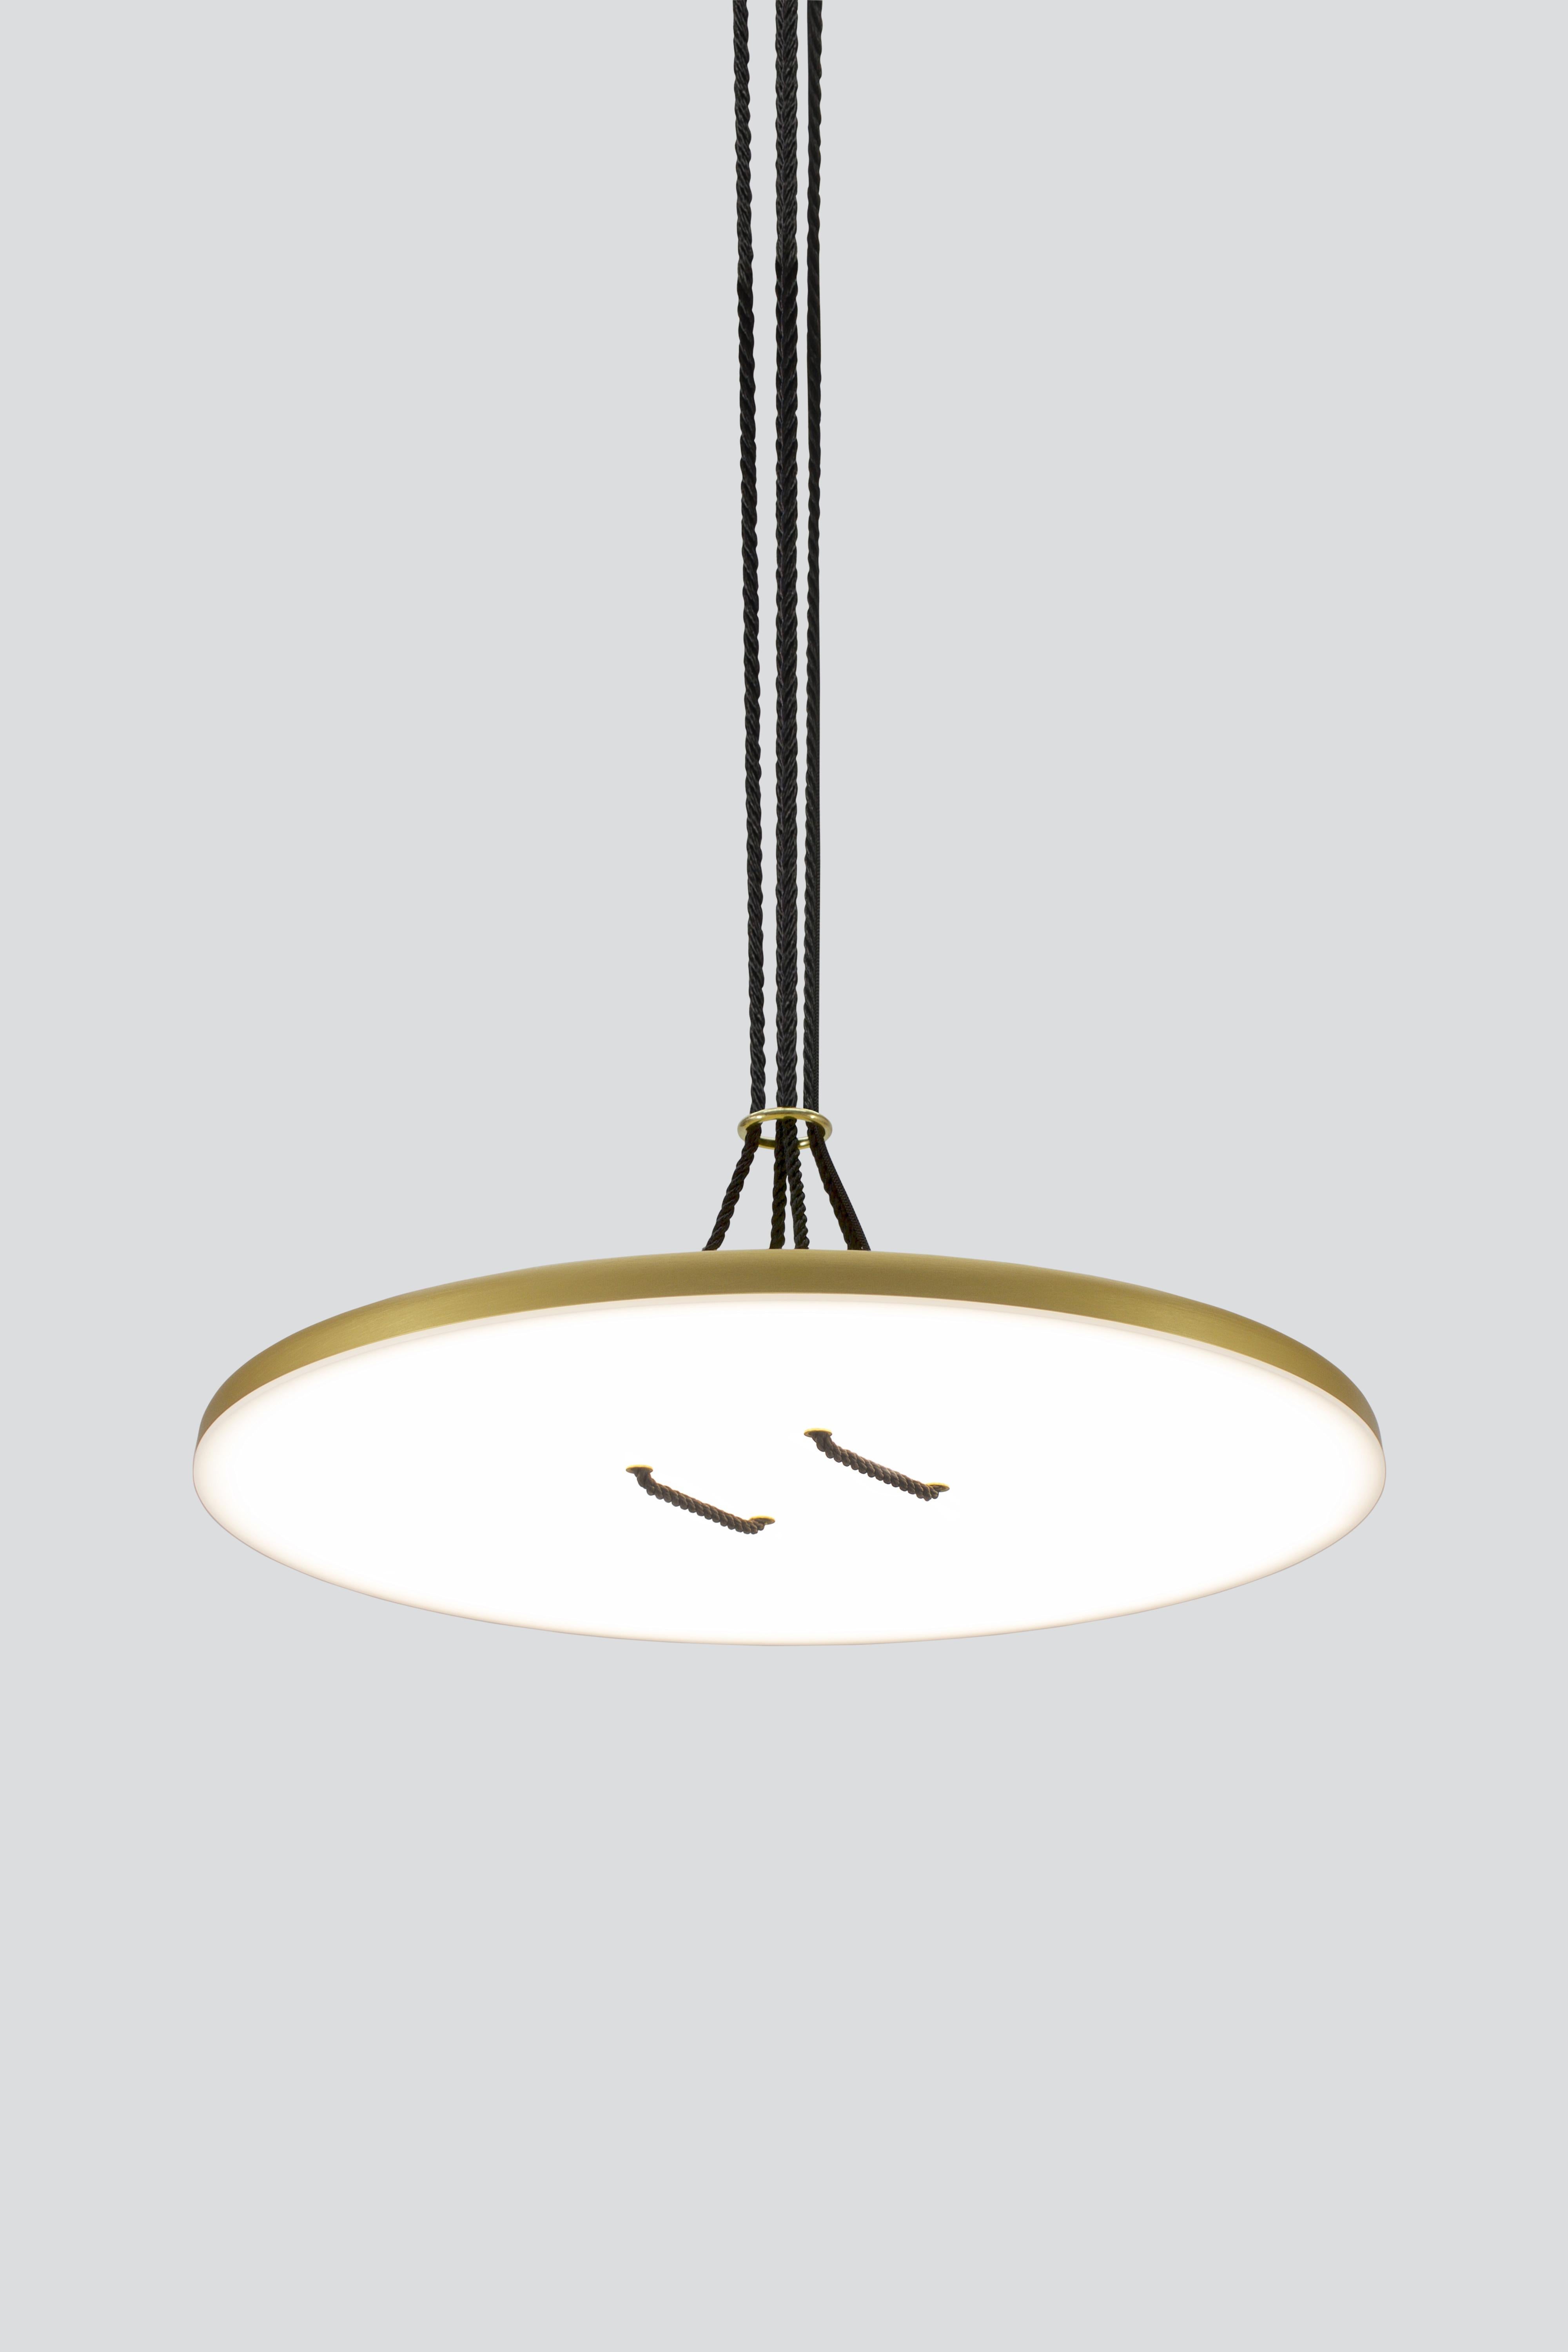 Contemporary Gold Pendant Lamp 'Button' For Sale 1